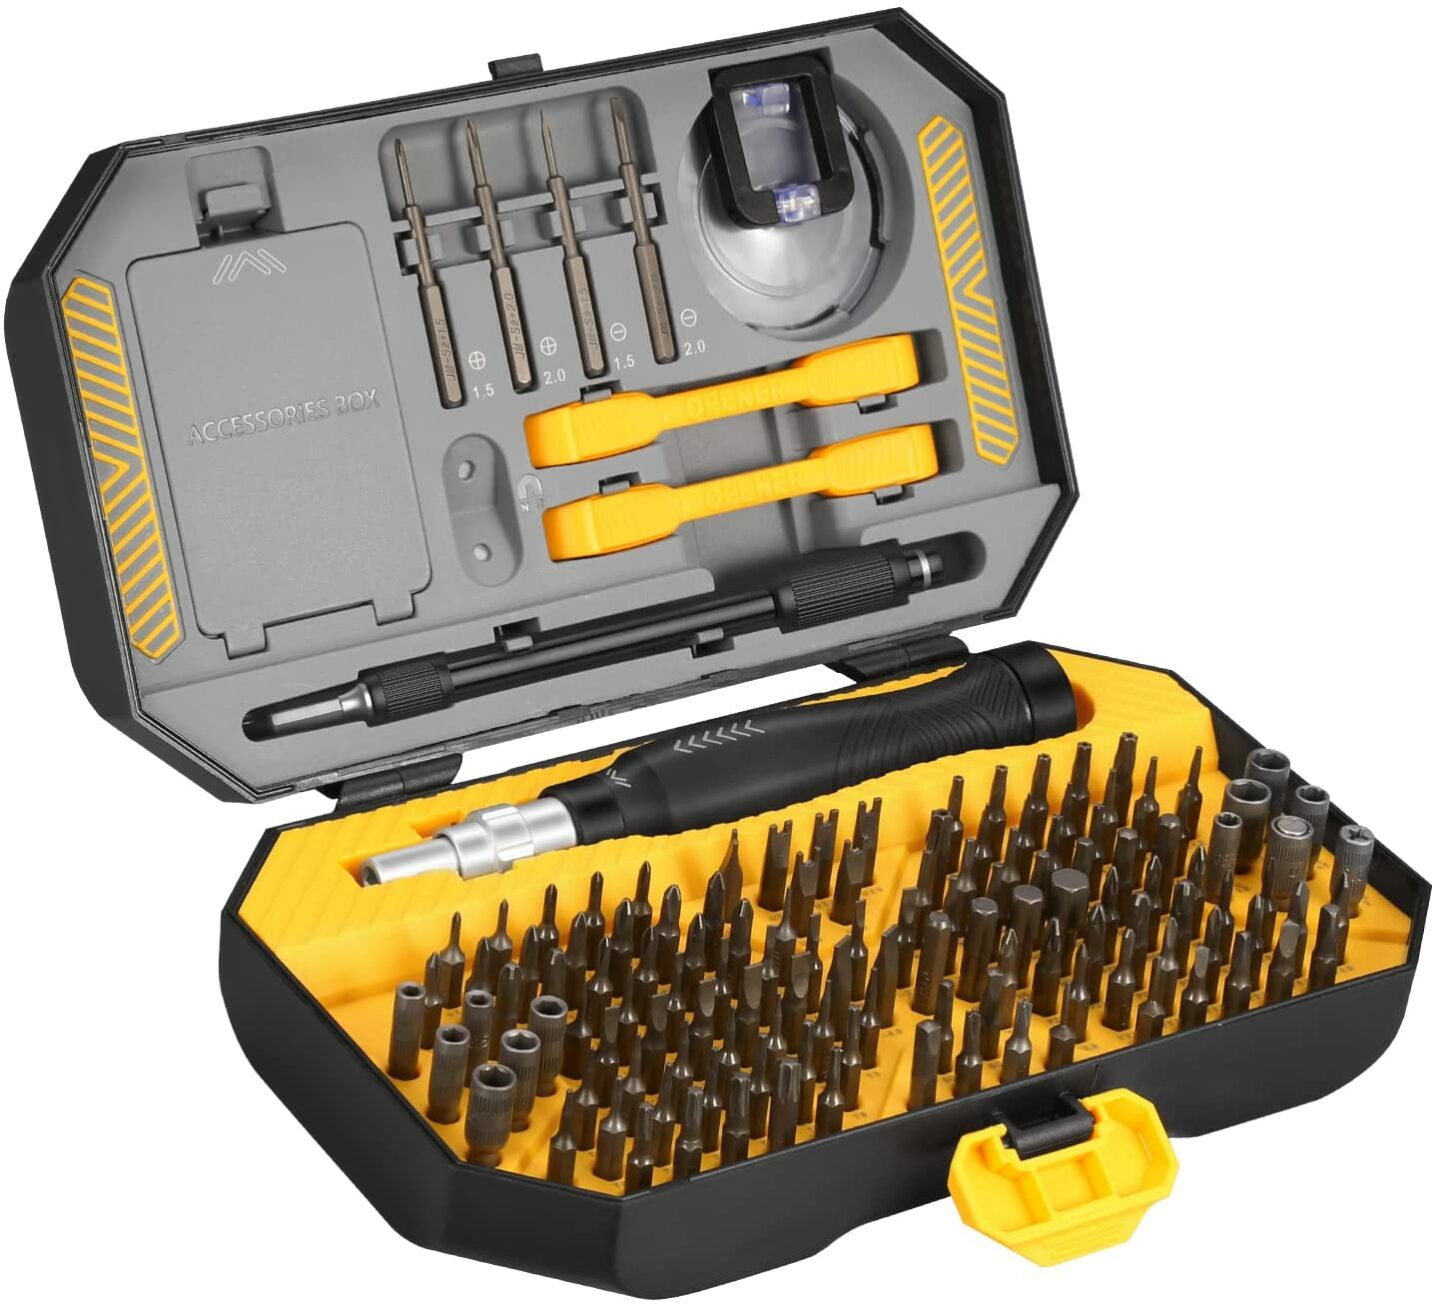 JAKEMY JM 8183 Screwdriver Set 145 in 1 Precision tool kit: Buy JAKEMY JM 8183 Screwdriver Set Best Price in Sri Lanka | ido.lk